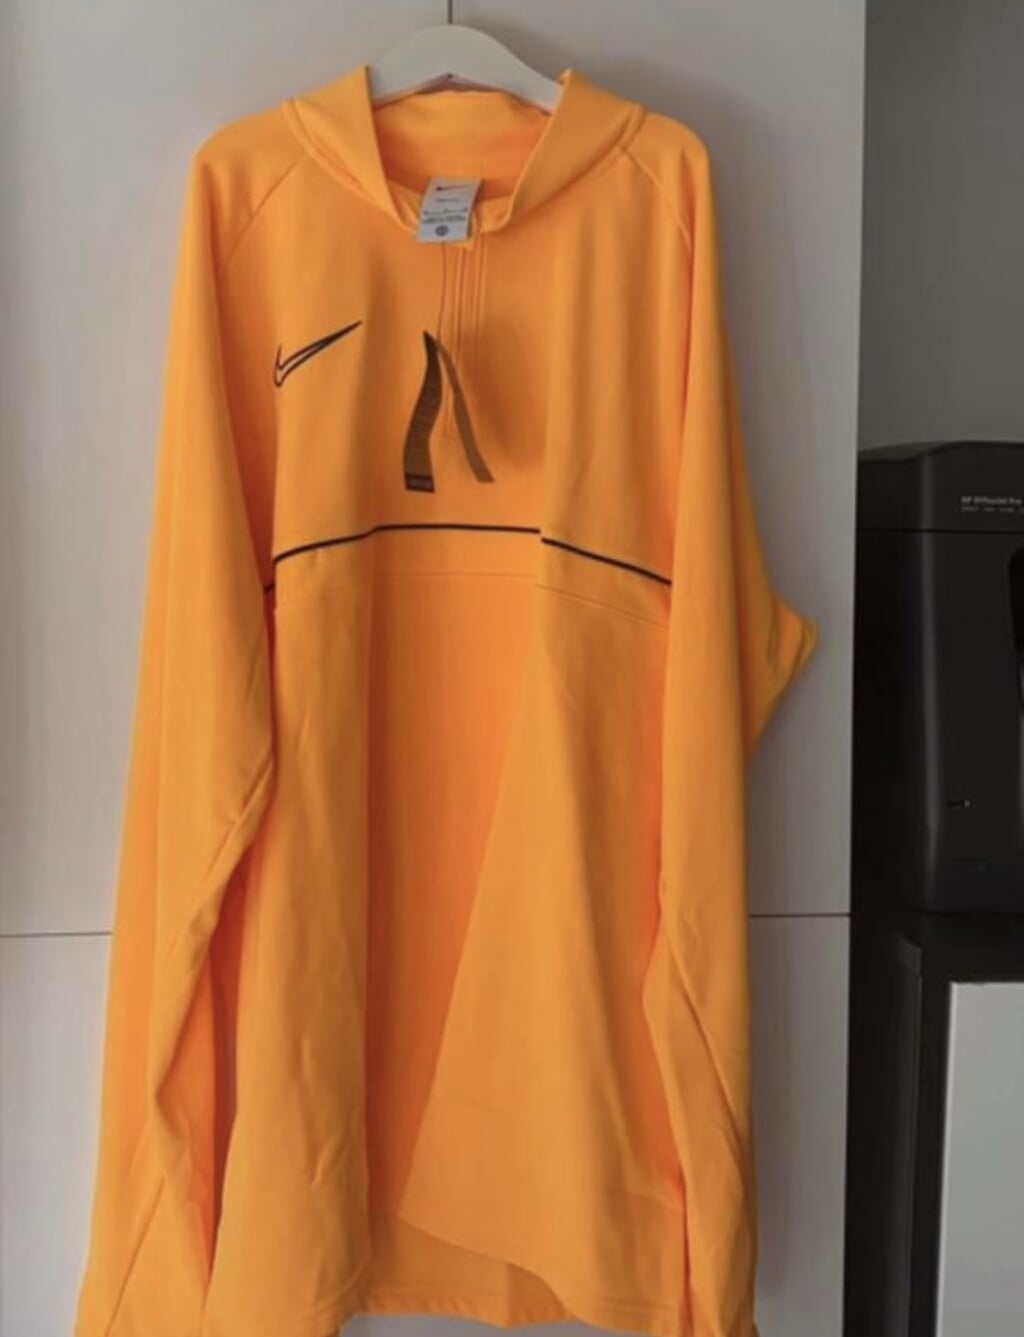 Nike dry fit shirt